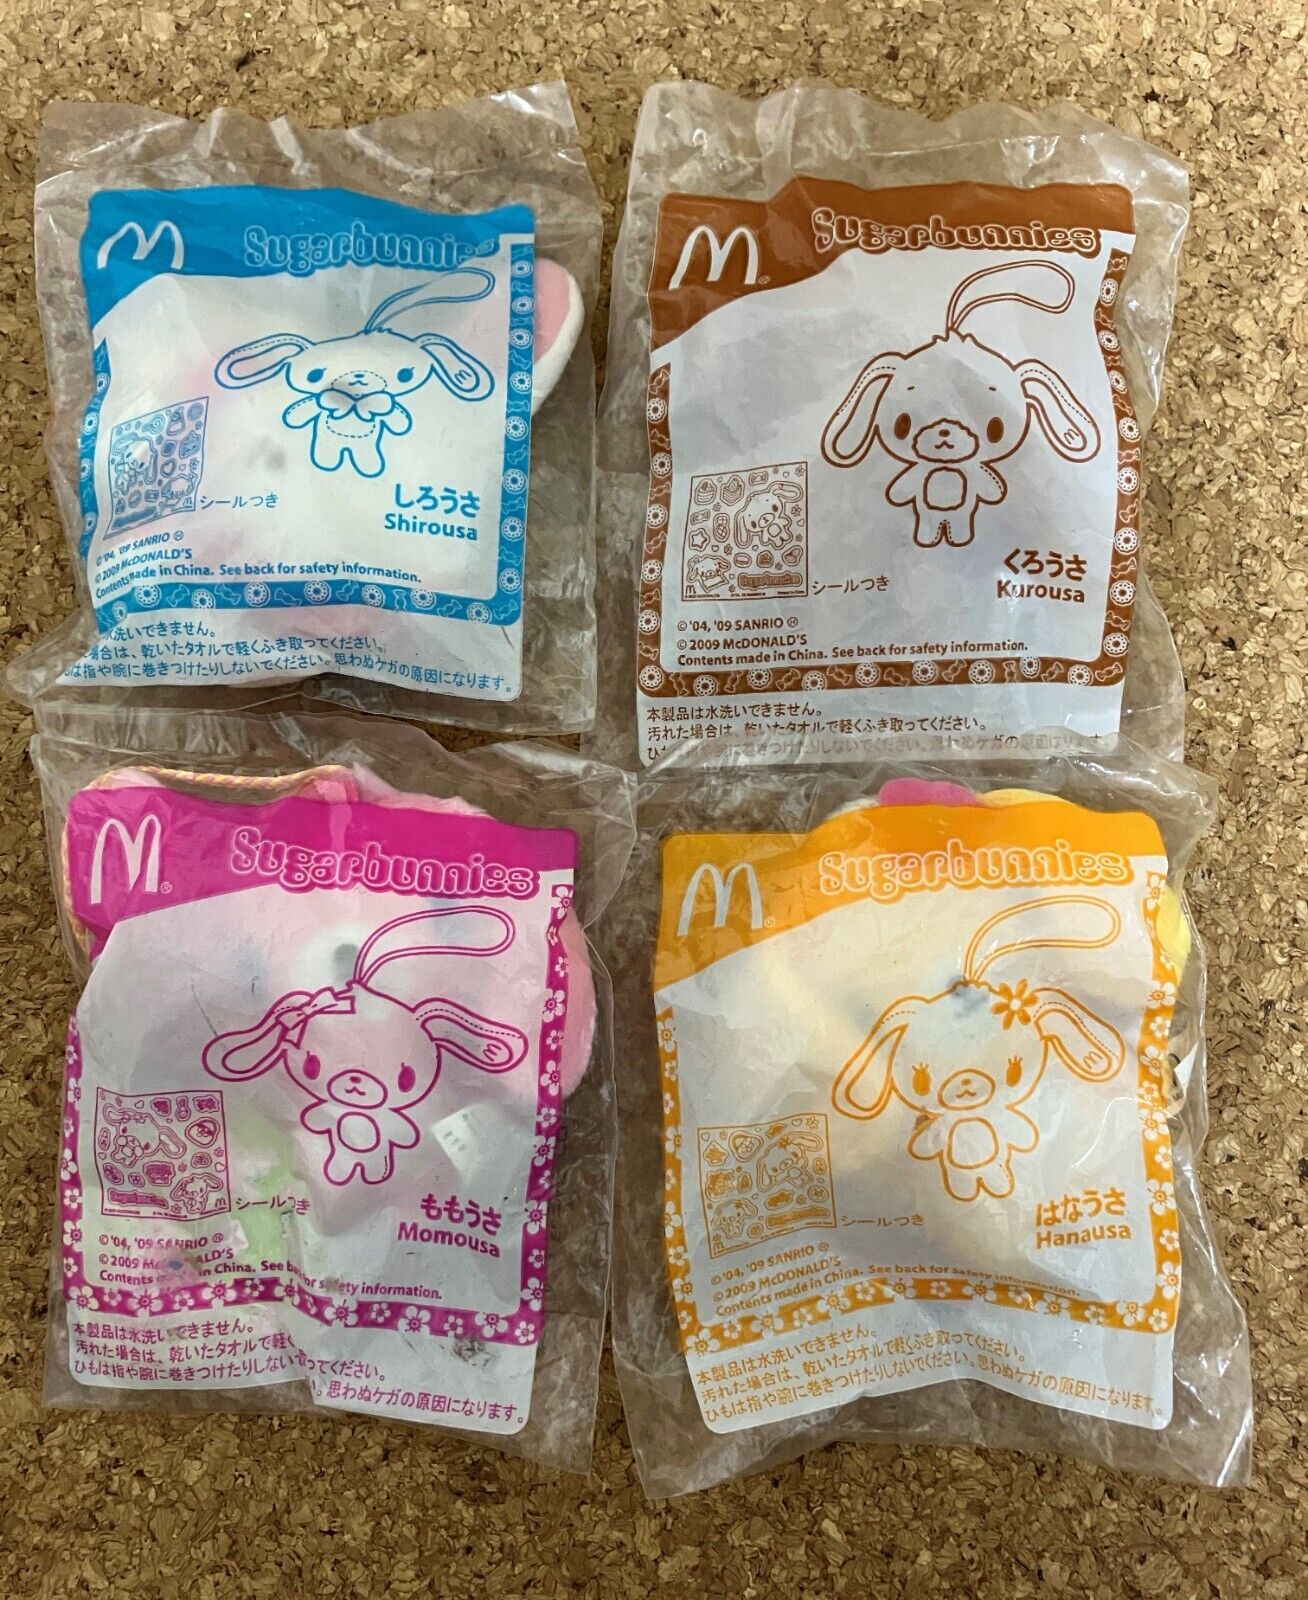 Sanrio Sugarbunnies McDonald's Strap Mascot Plush Toy Set of 4 Complete Japan